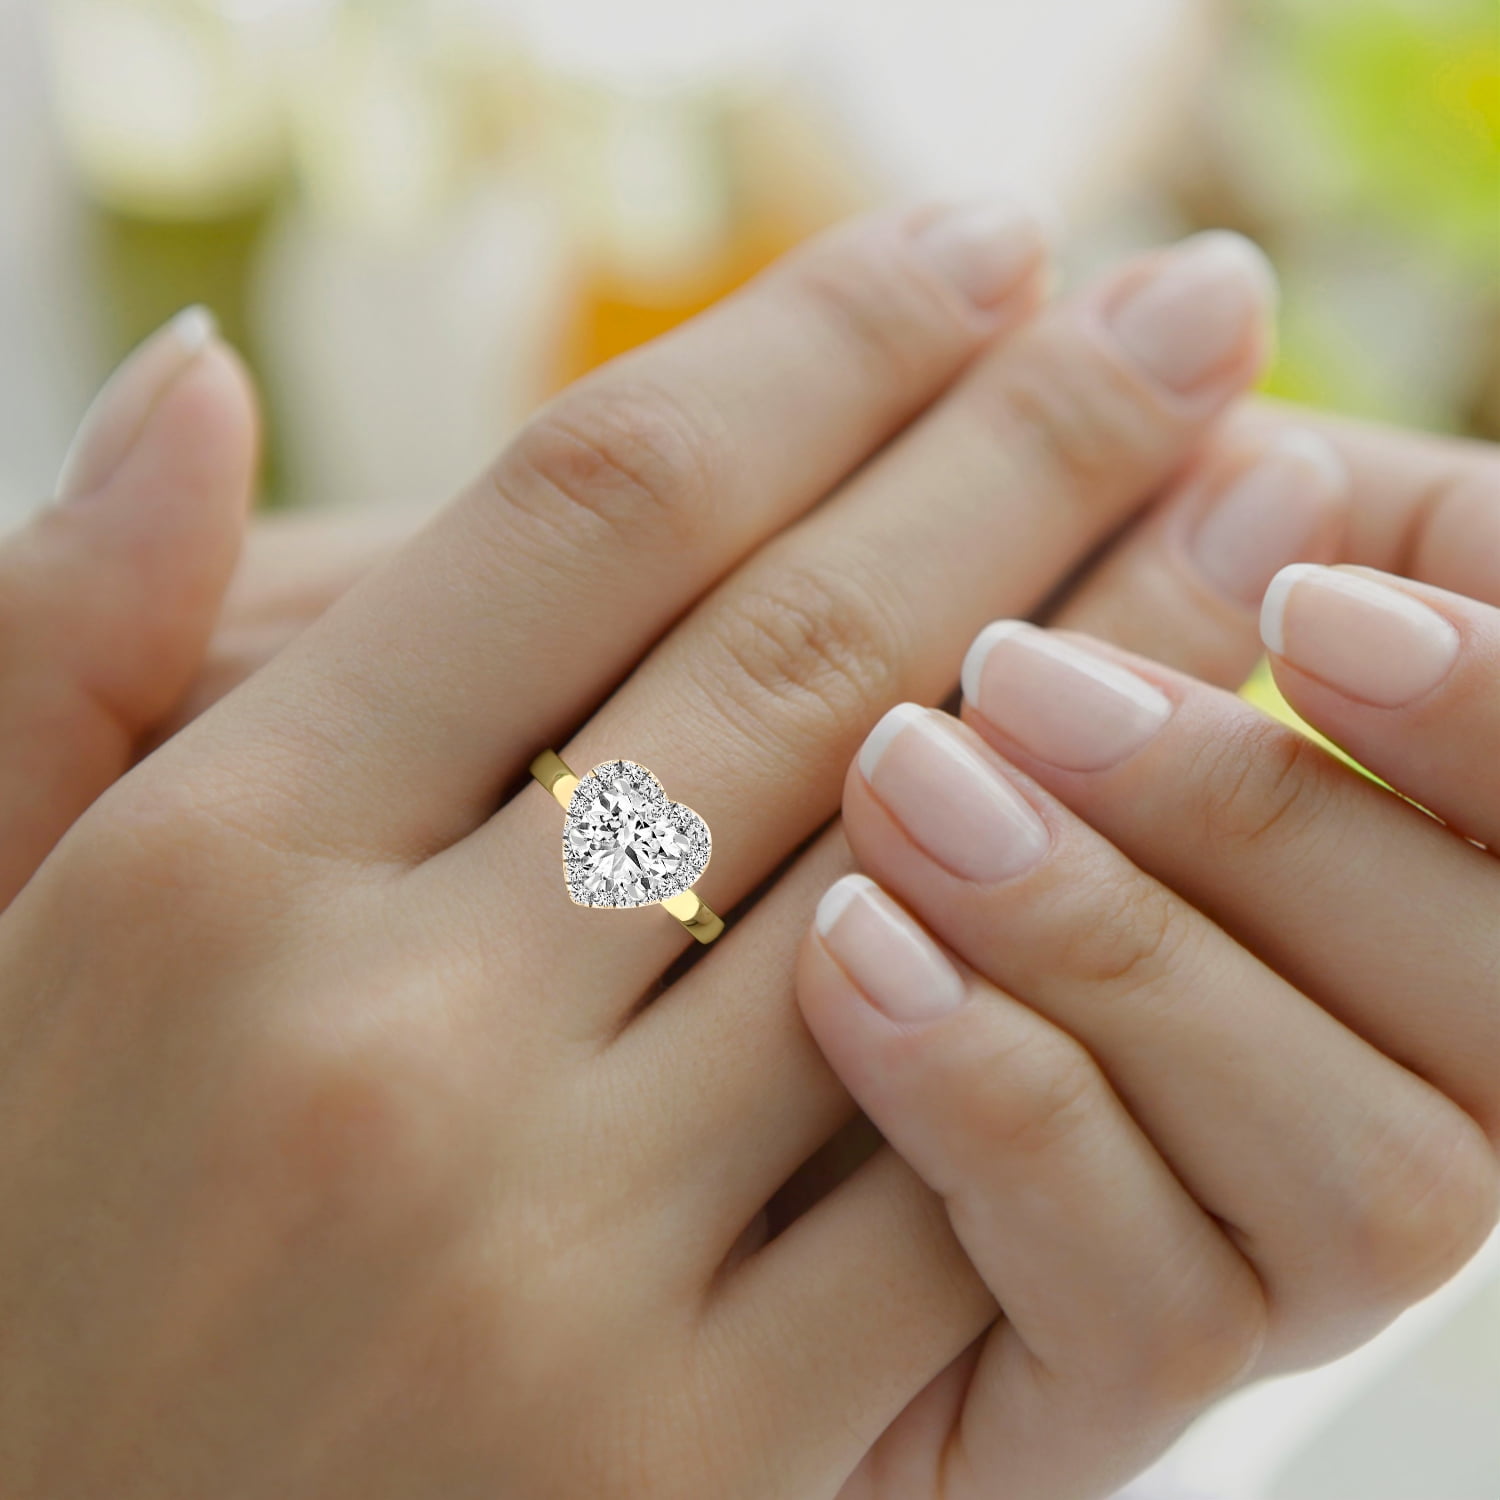 14K White Gold Heart-Shaped 0.75ctw Diamond Ring Size 5.5 | eBay